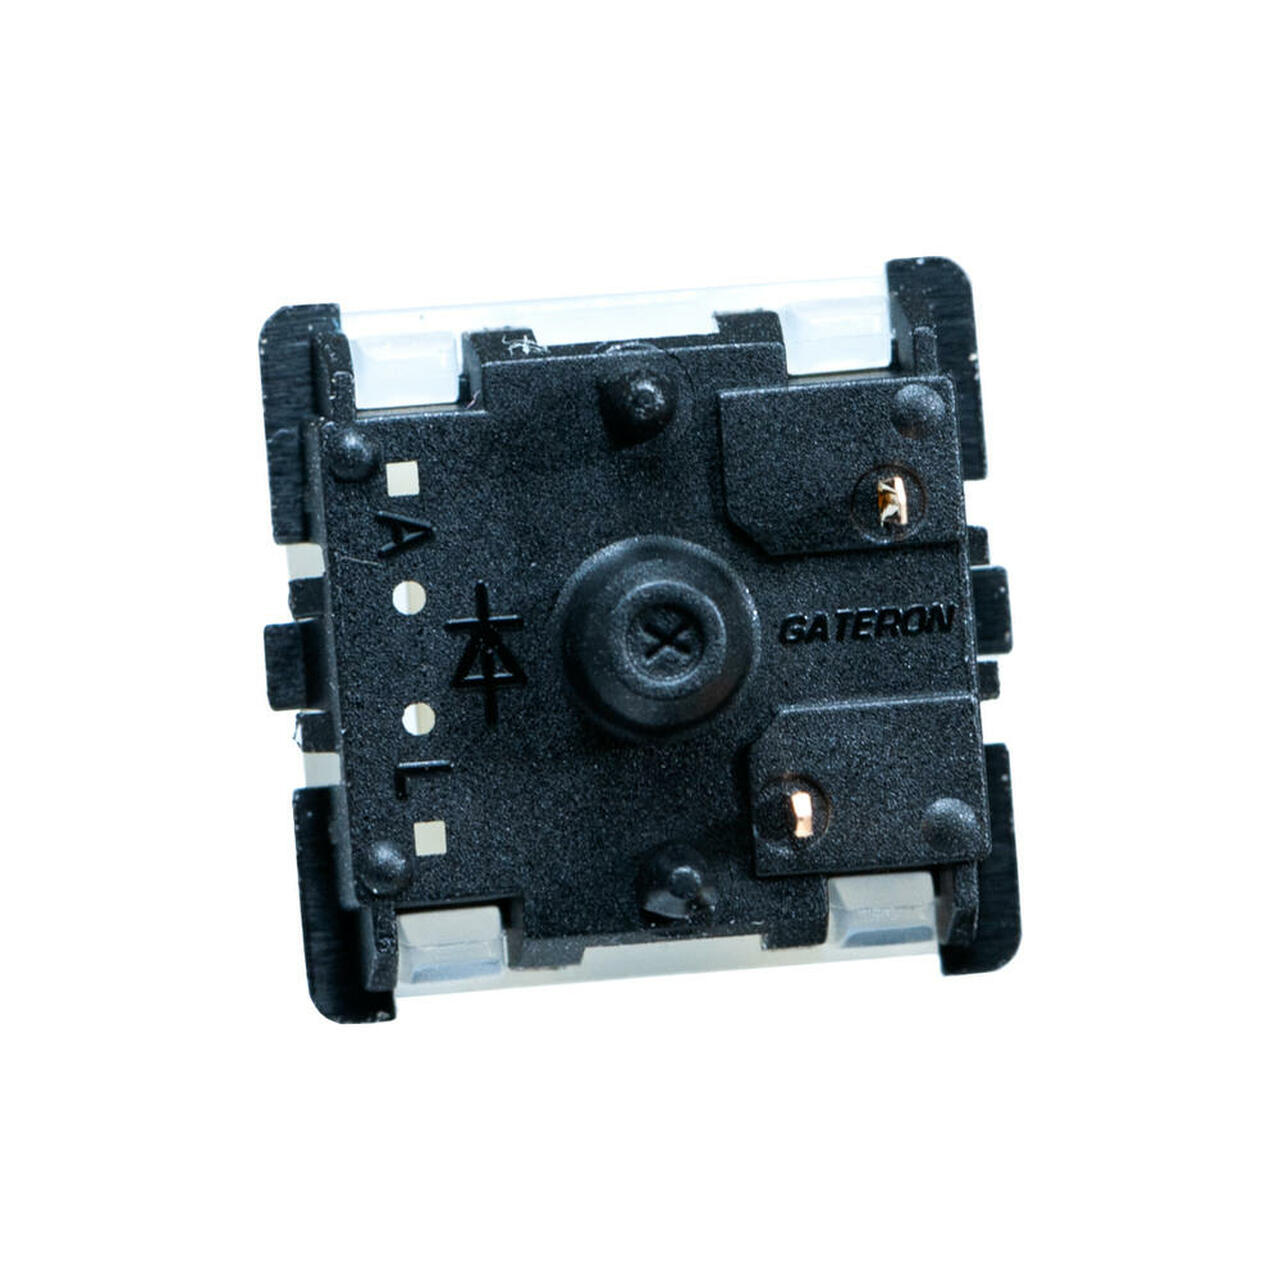 Gateron X Linear Switch